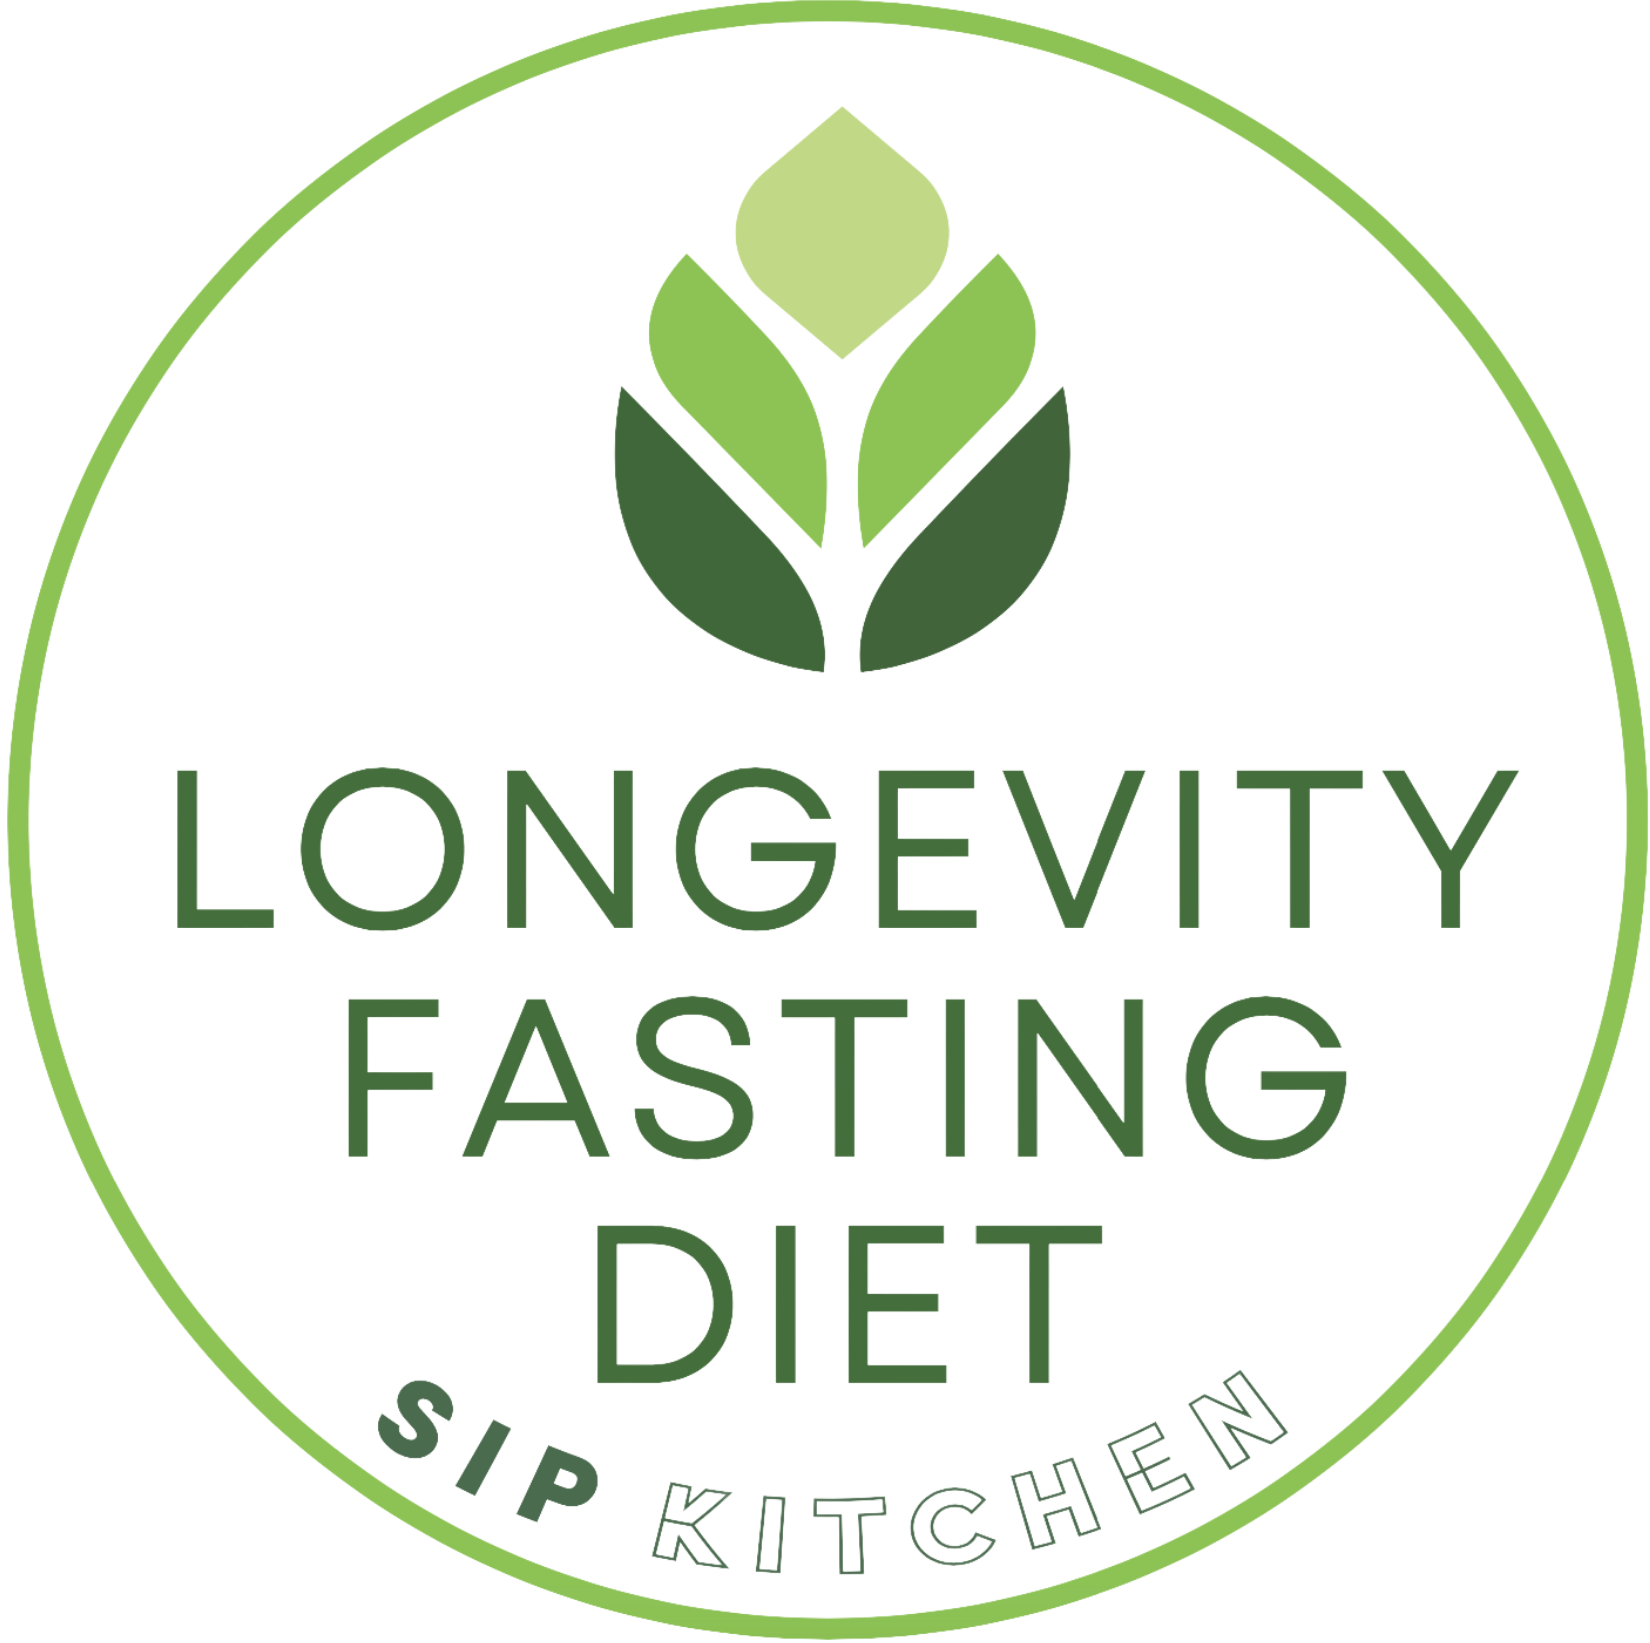 Longevity Fasting Diet by Sip Kitchen